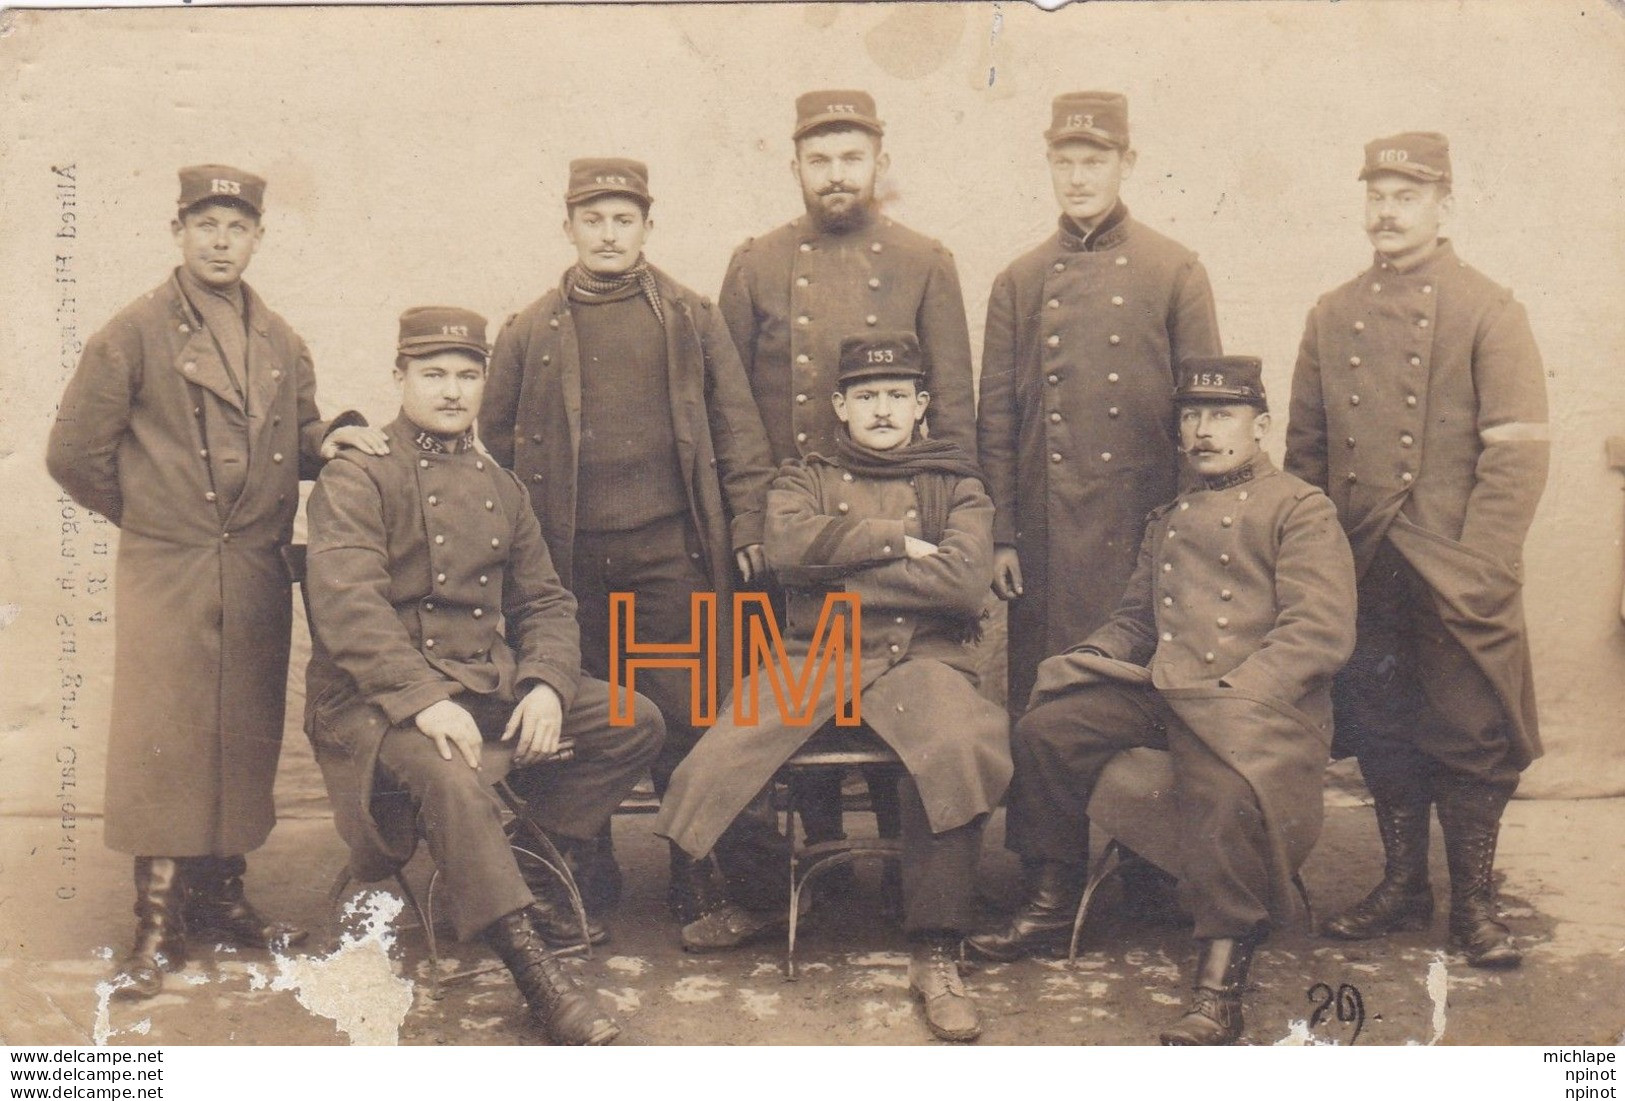 TH  MILITARIA 14/18  -  Photo - 1914-18